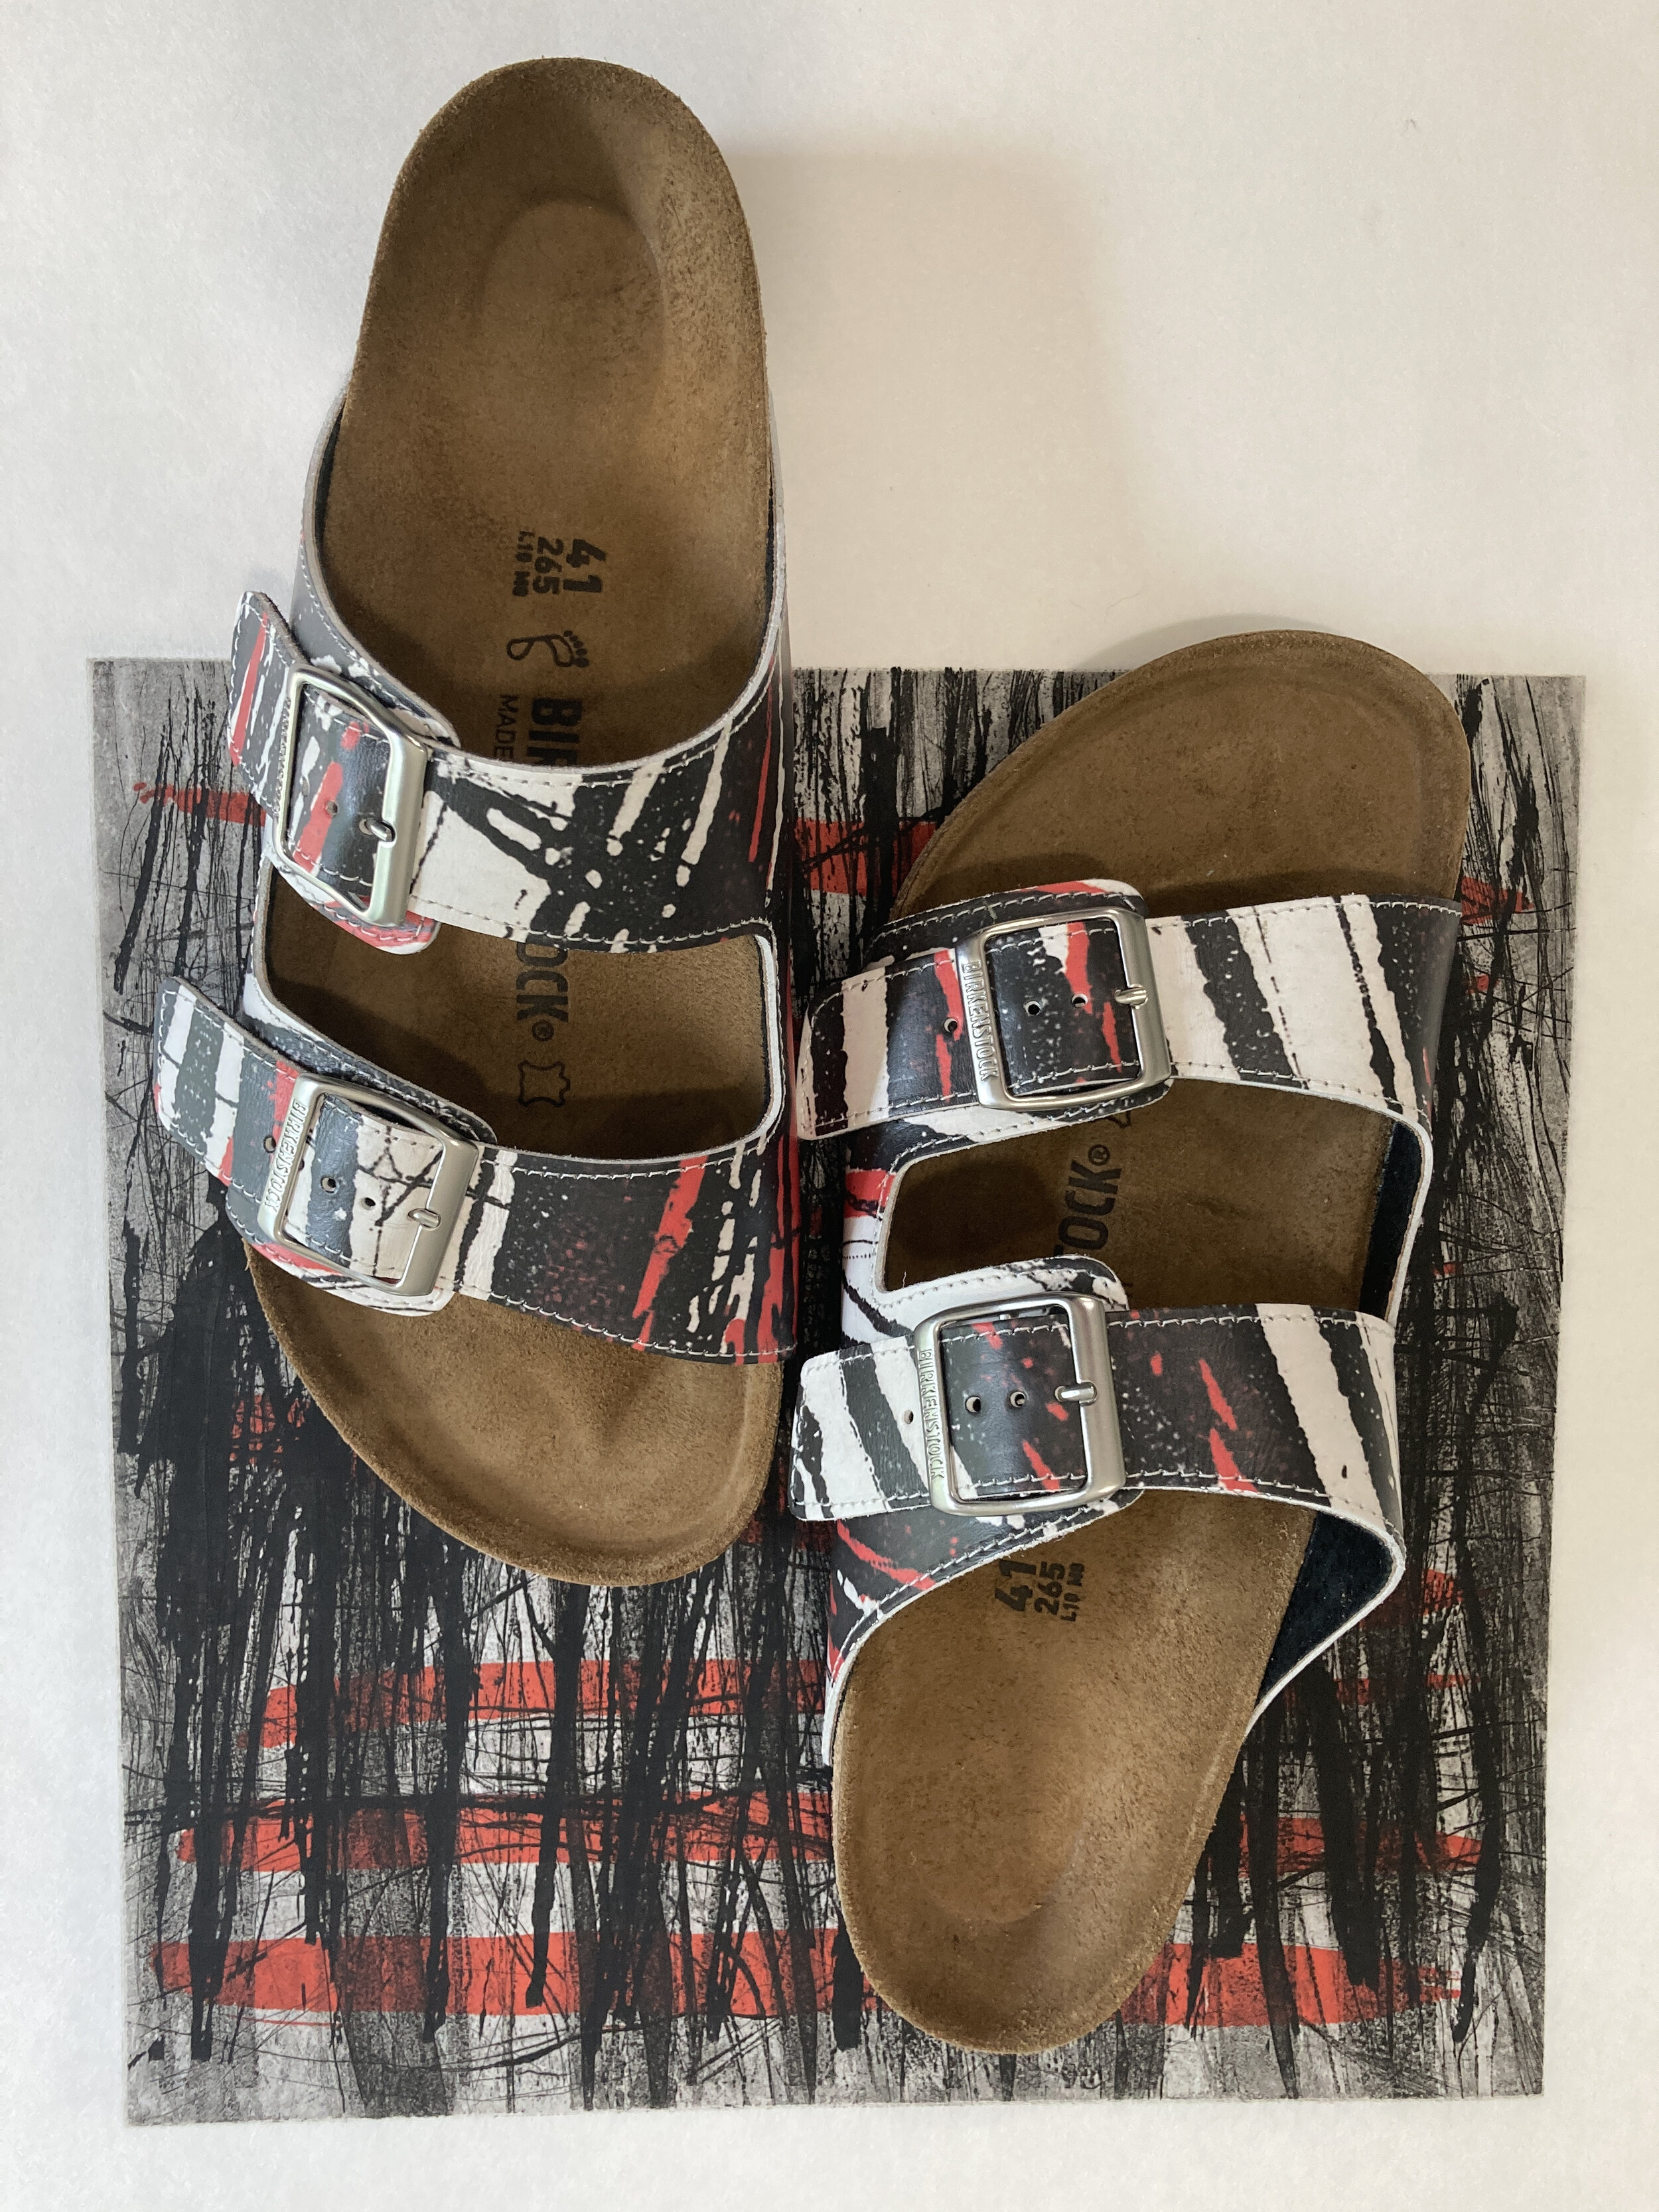 Custom Birkenstocks – MICHAEL GREY FOOTWEAR